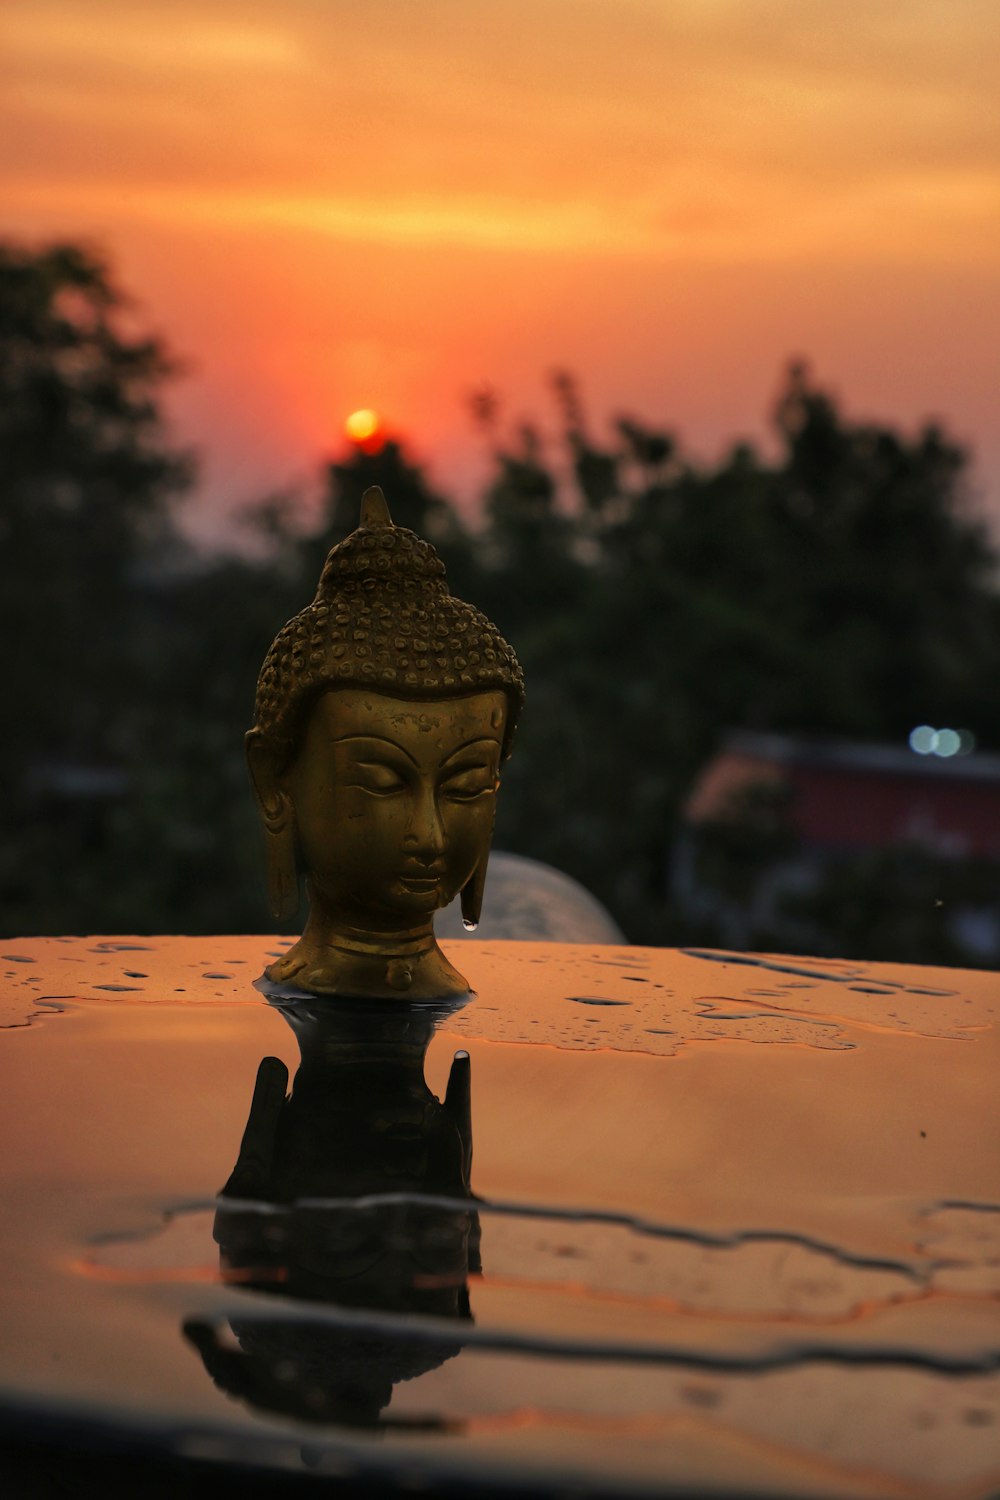 gold buddha figurine on white textile during sunset